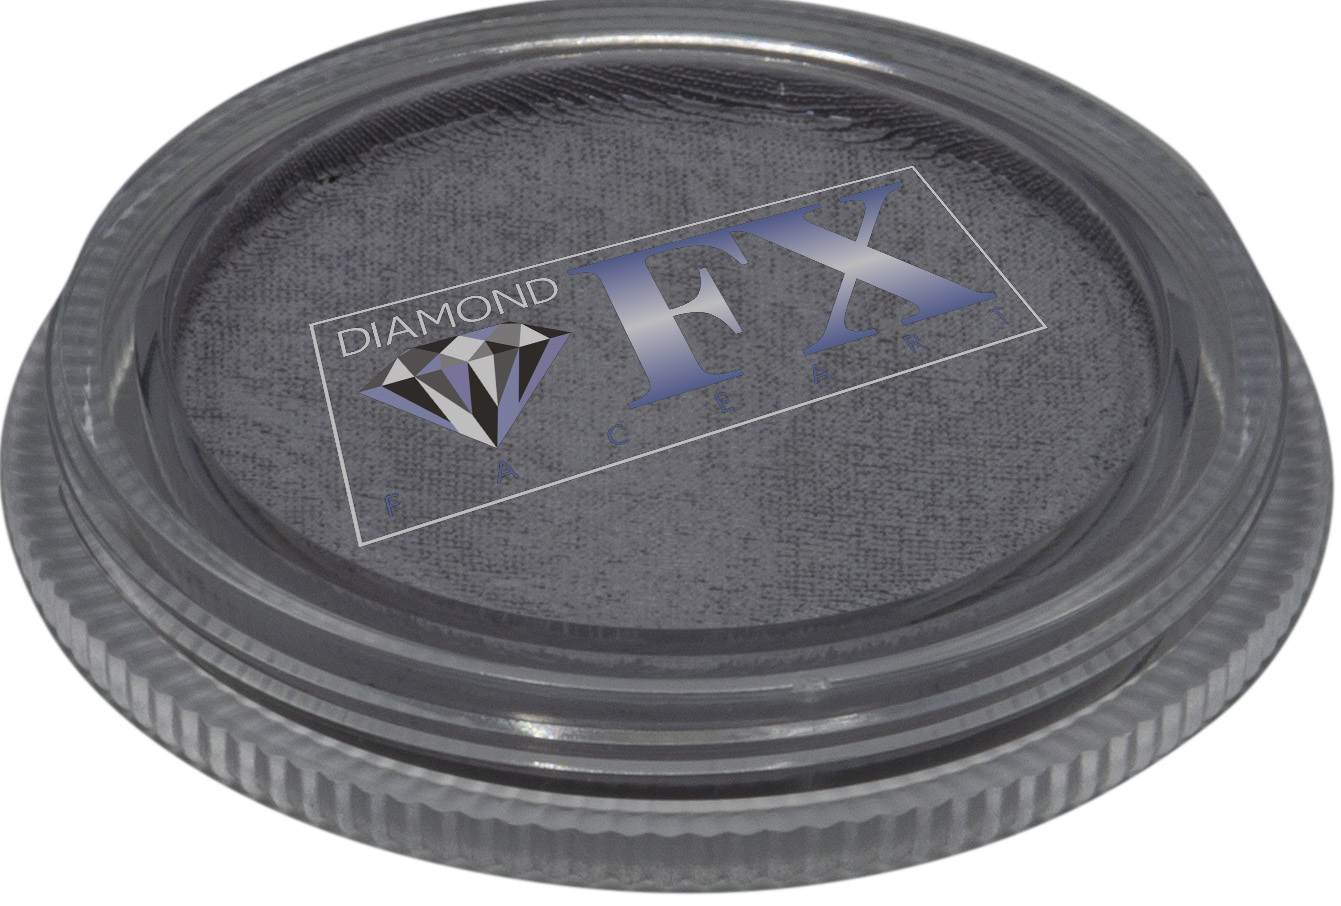 Diamond FX Grey 30g - Small Image